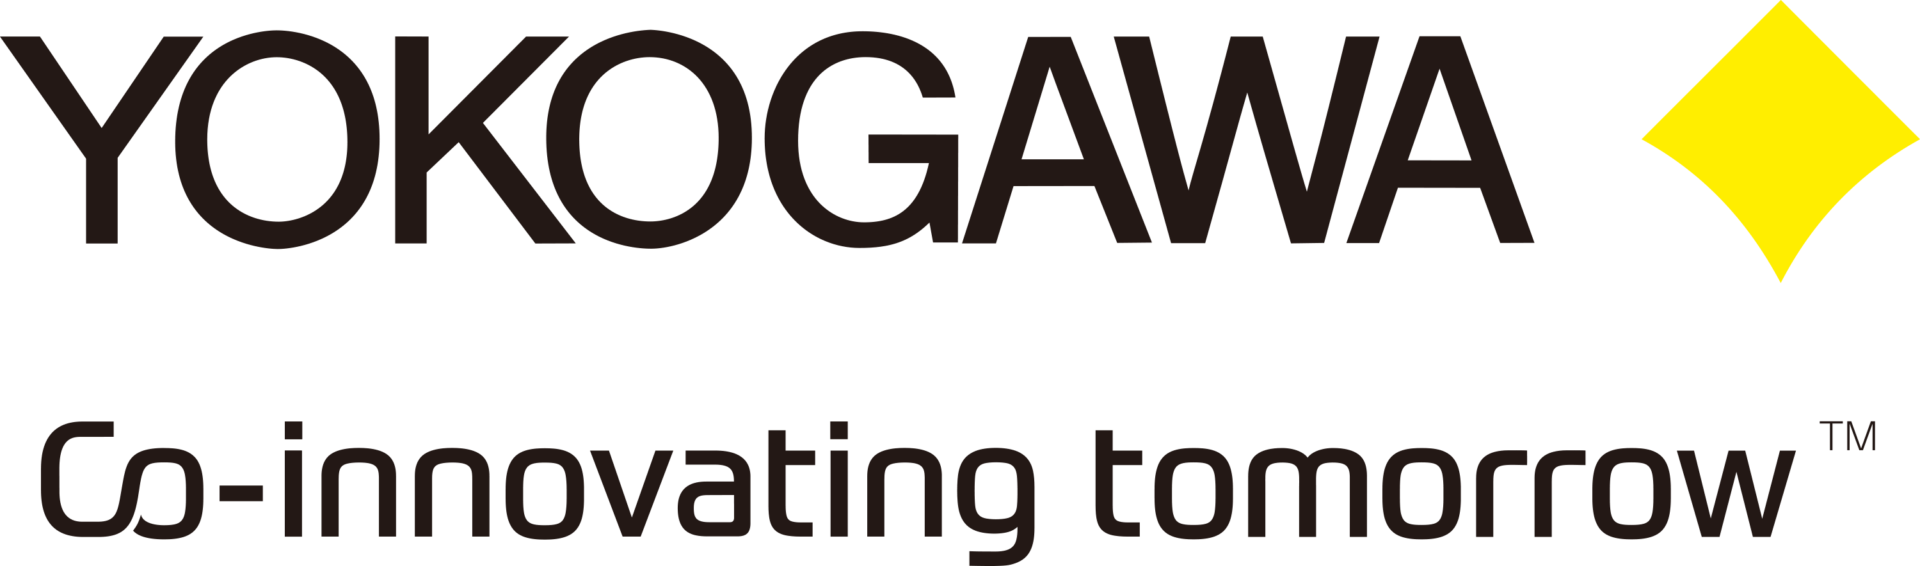 Yokogawa Logo Tm